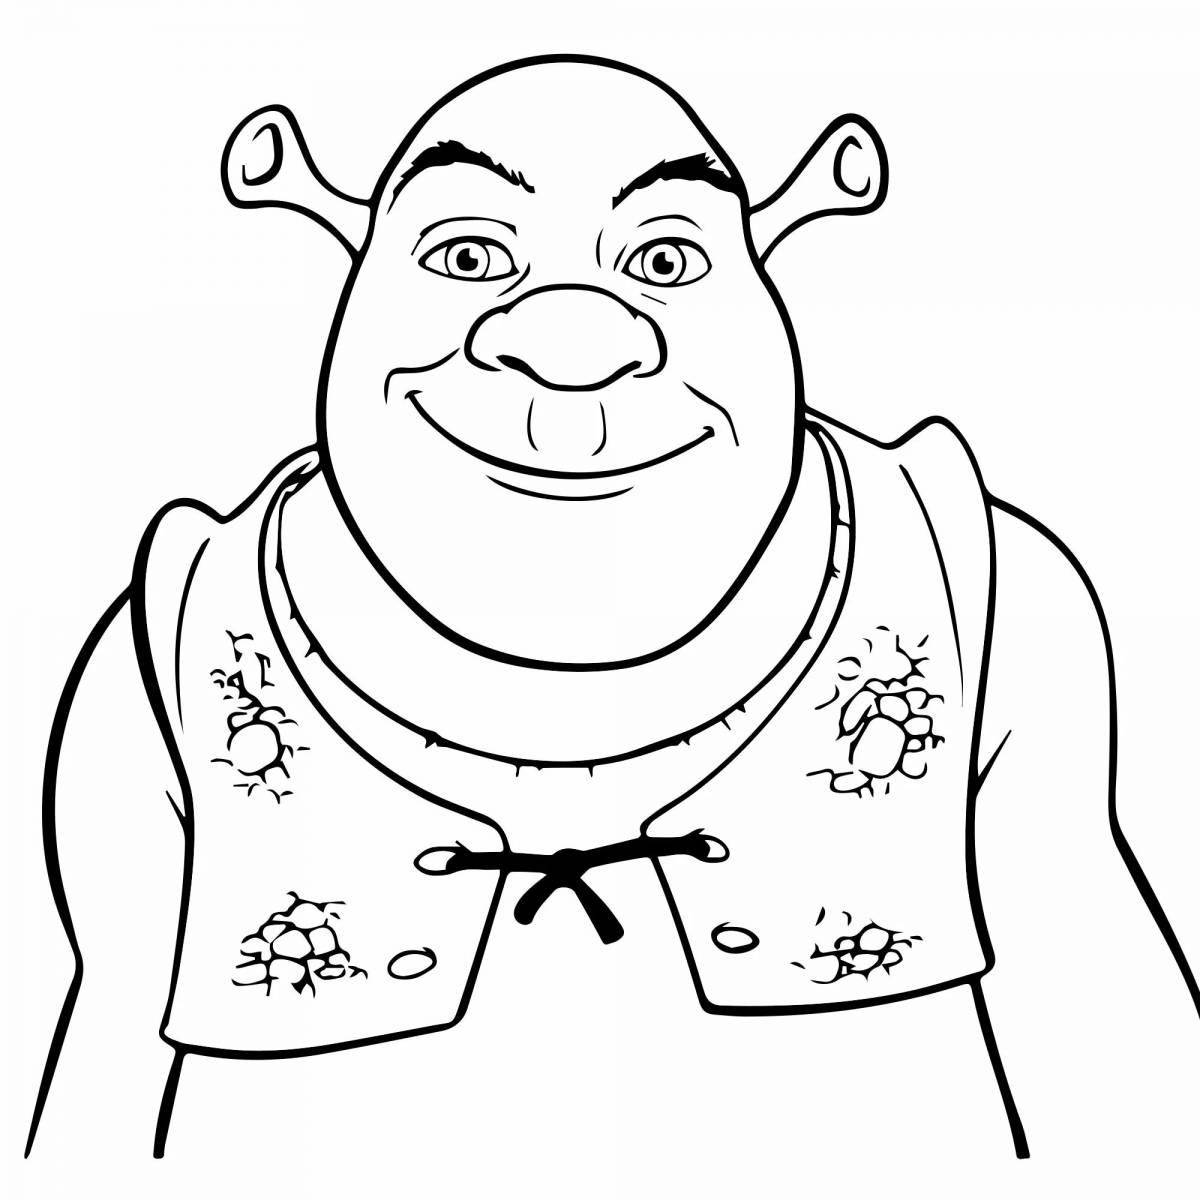 Charming Shrek coloring page